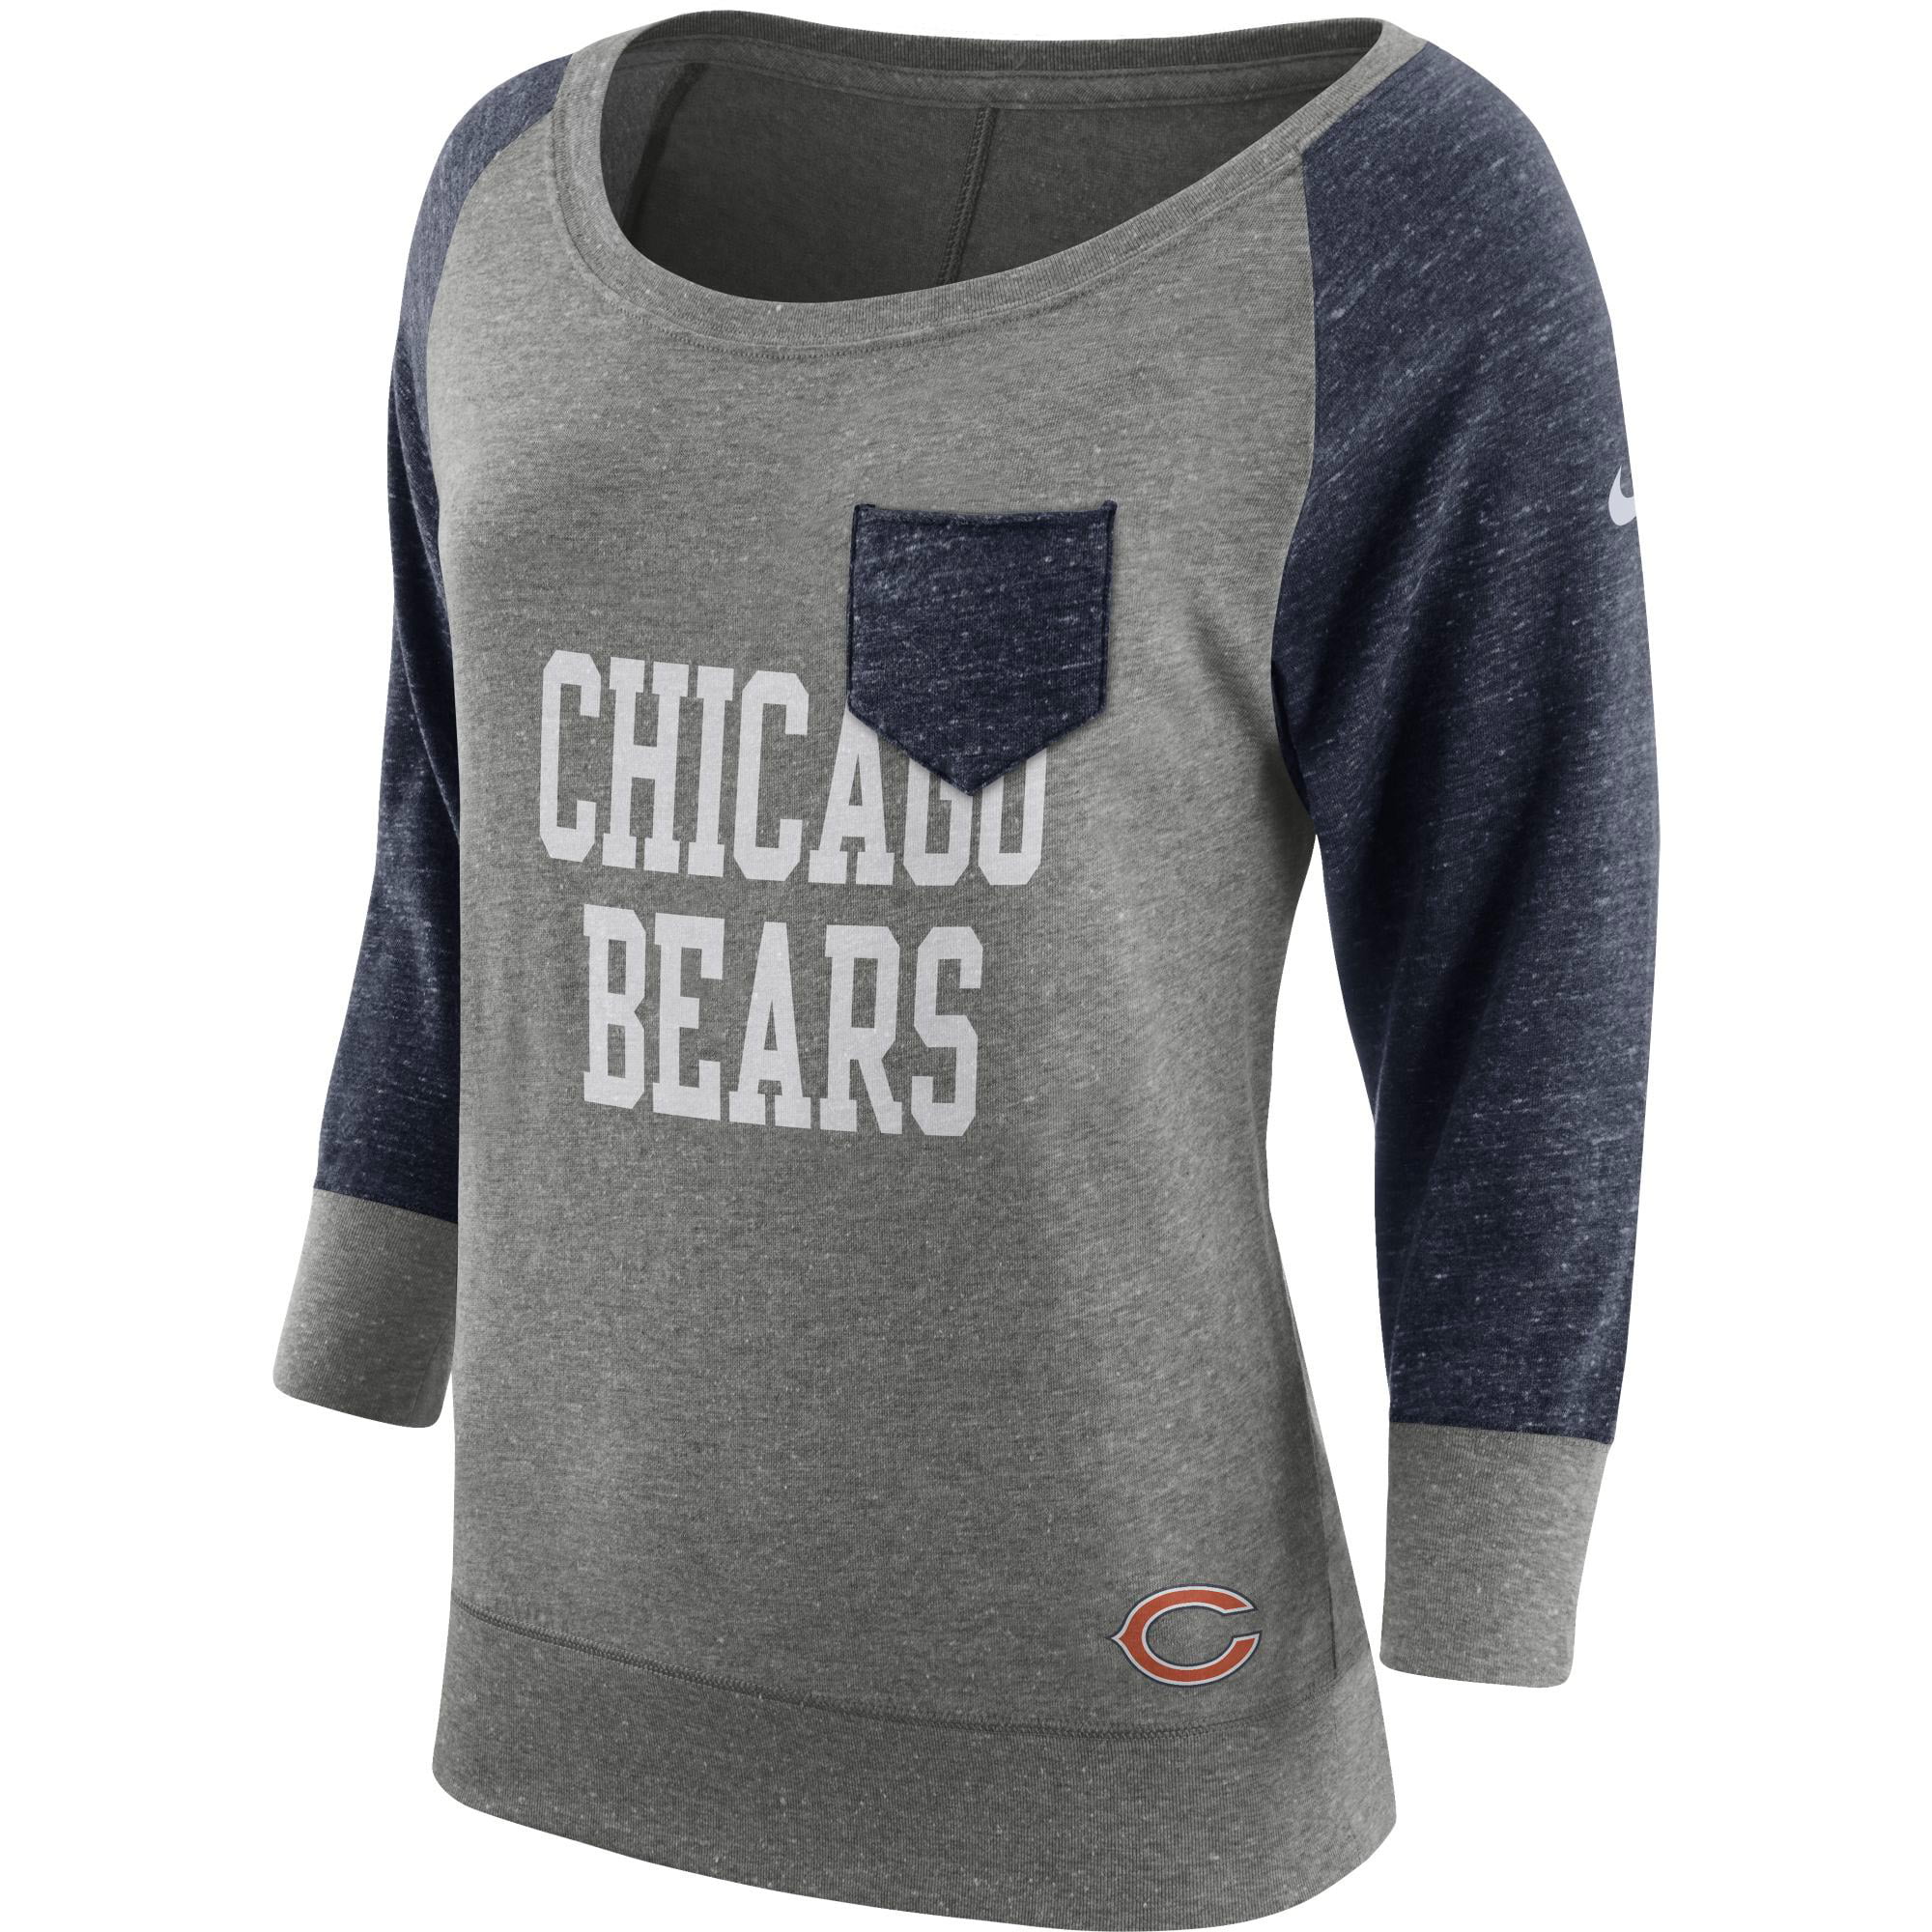 chicago bears nike t shirt